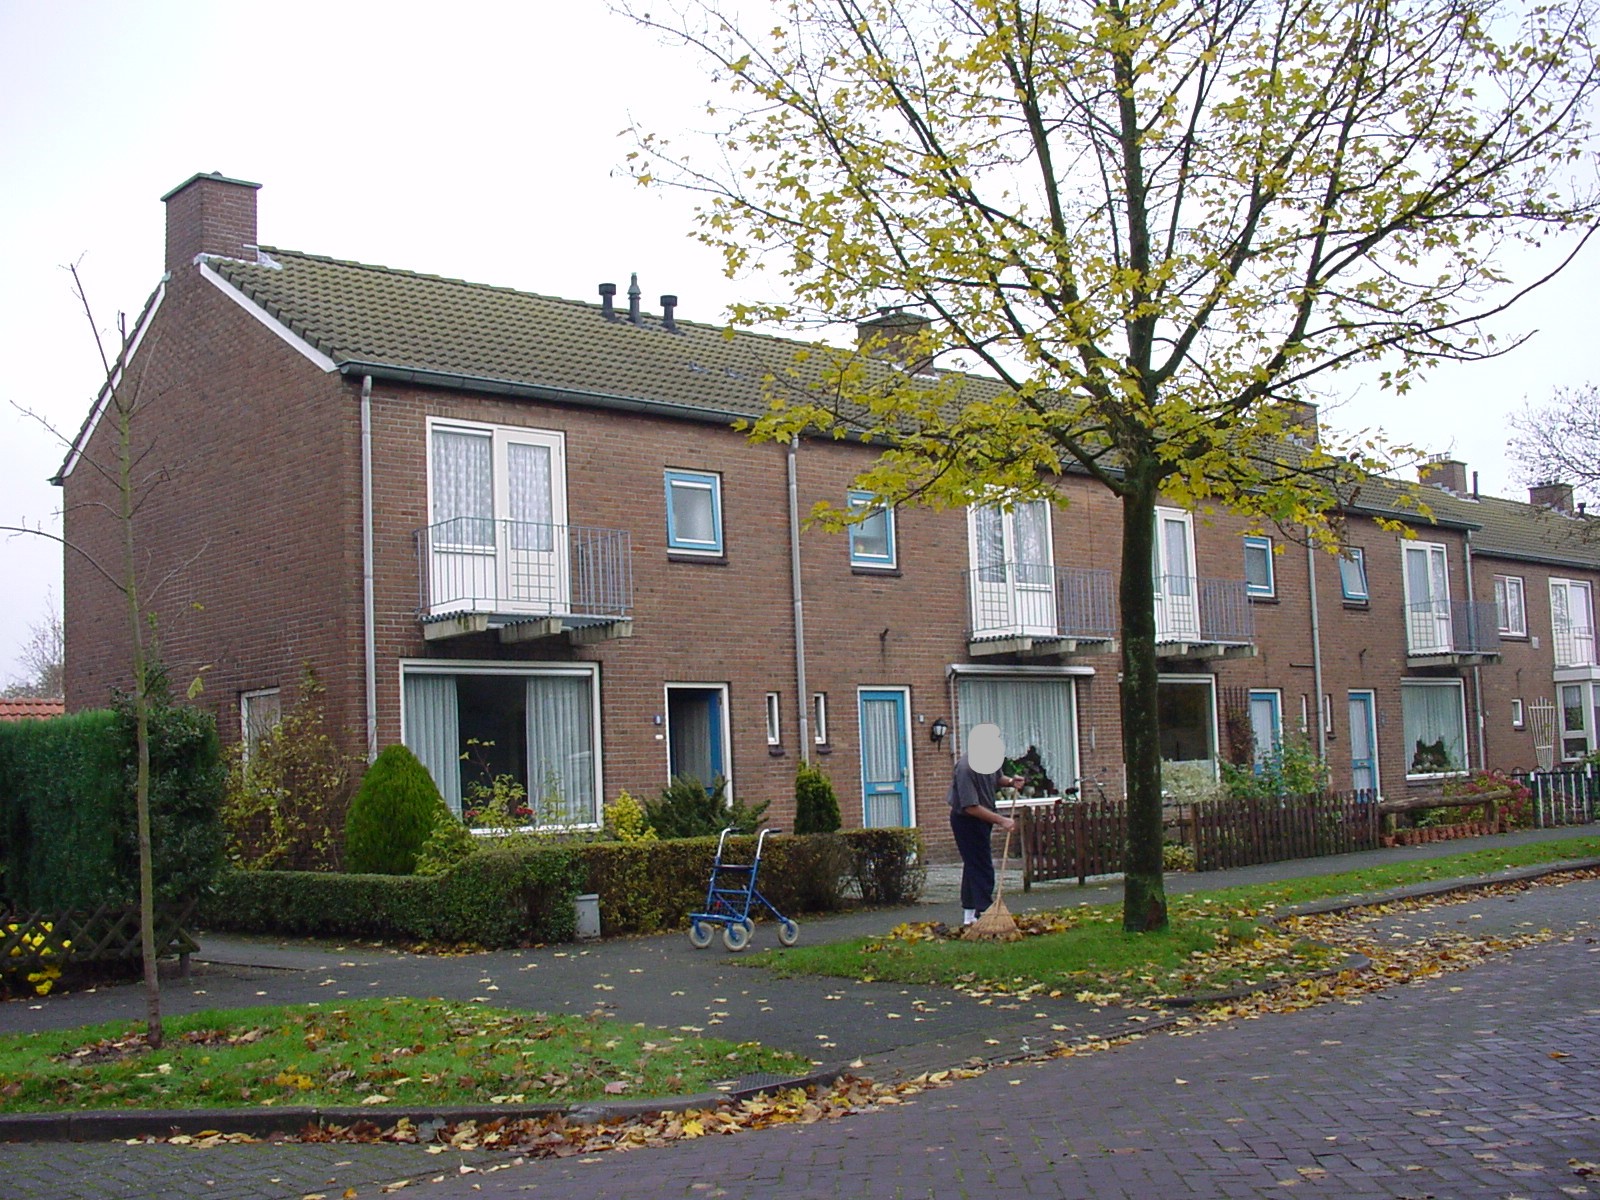 Amalia van Solmsstraat 15, 7902 AD Hoogeveen, Nederland